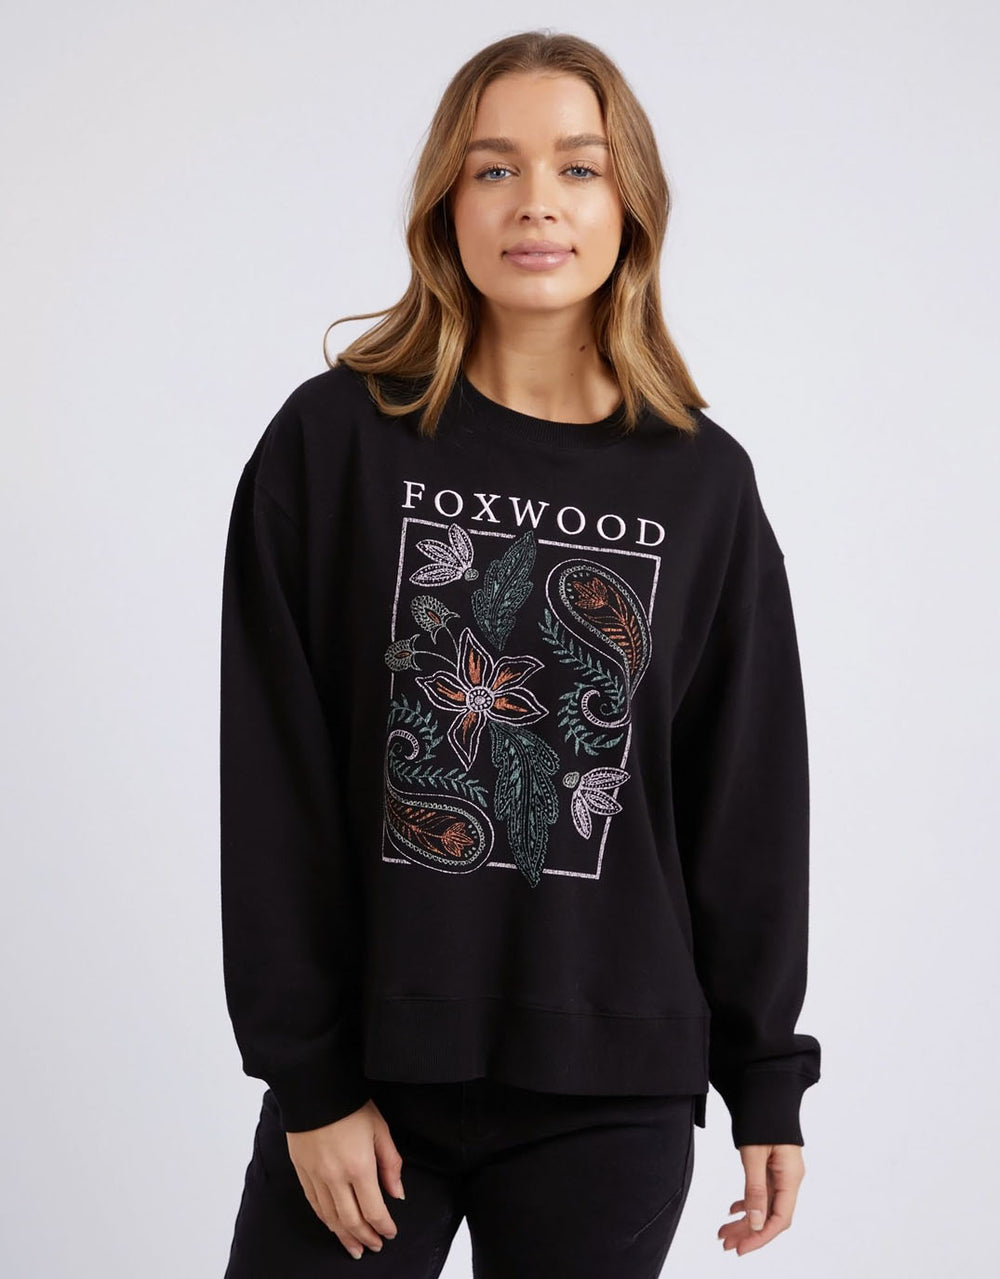 foxwood-paisley-crew-black-womens-clothing